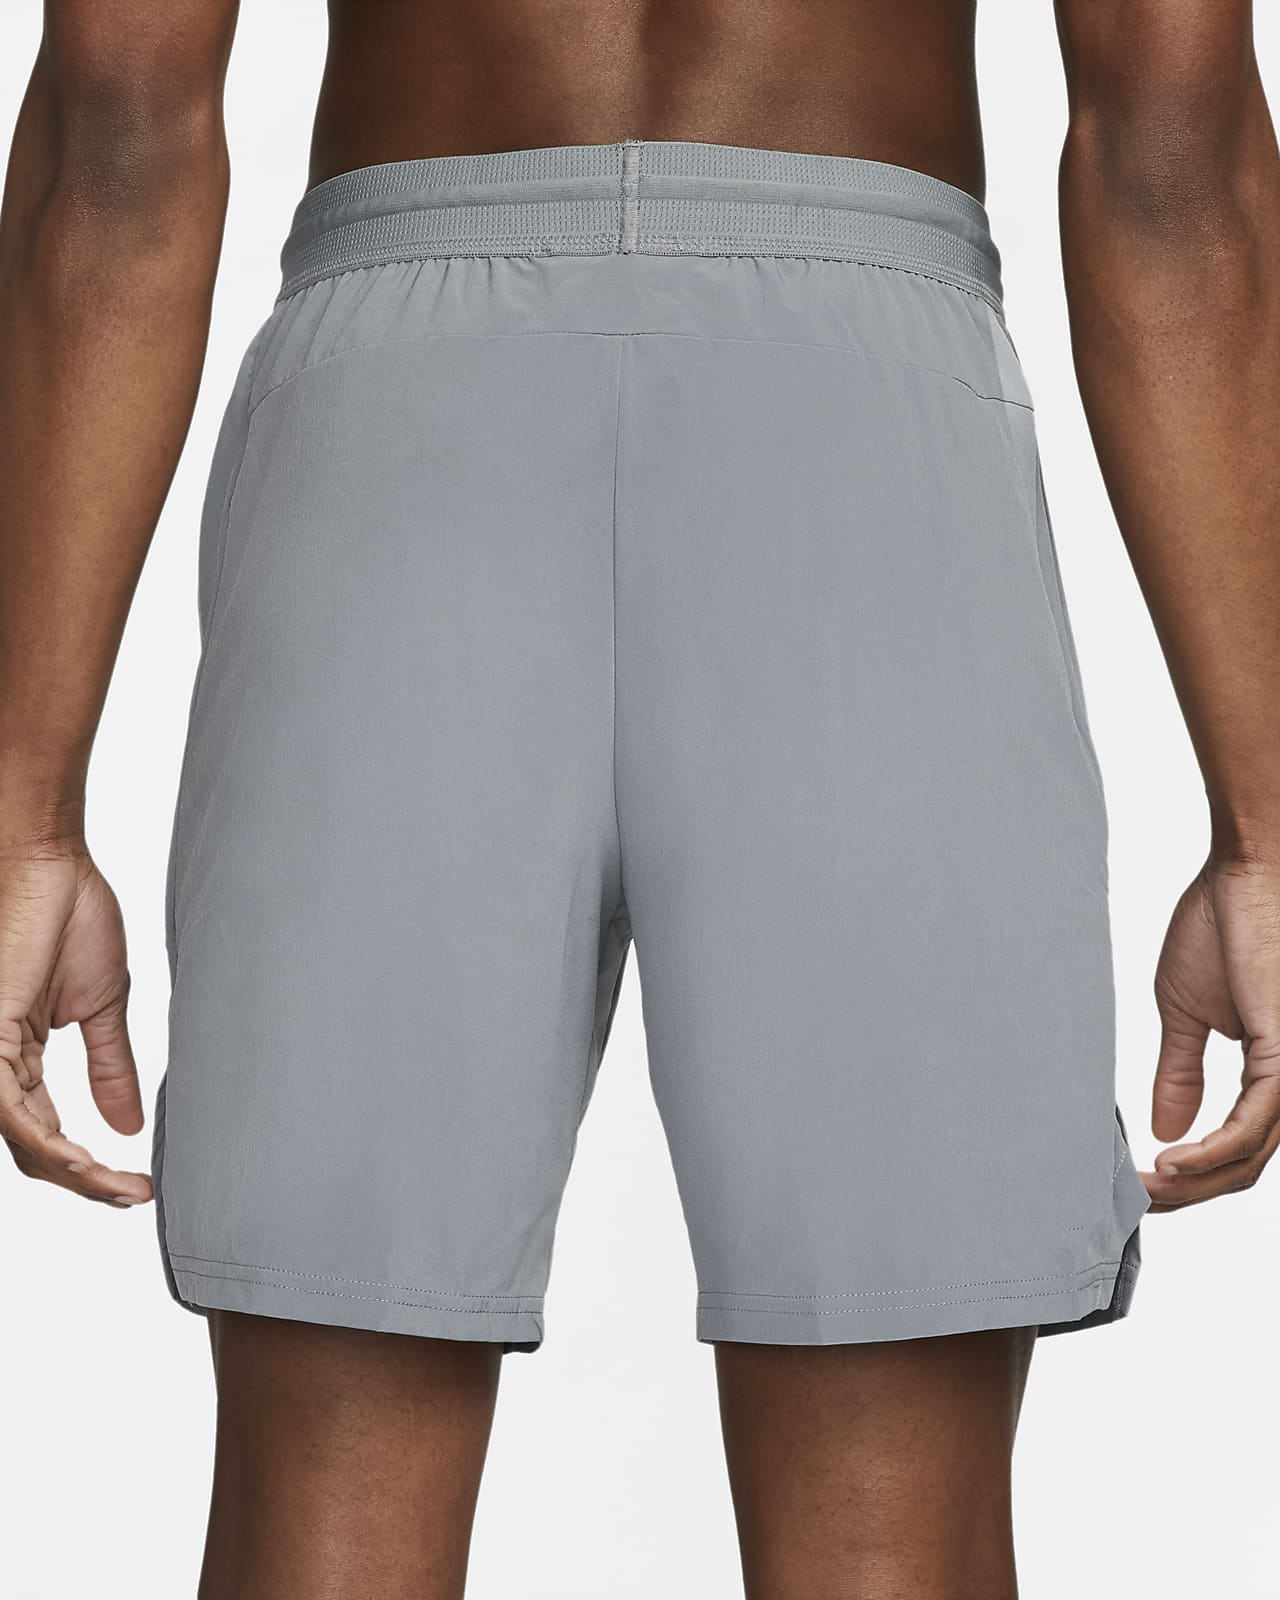 Nike Men's Starting 5 8 Inch Shorts